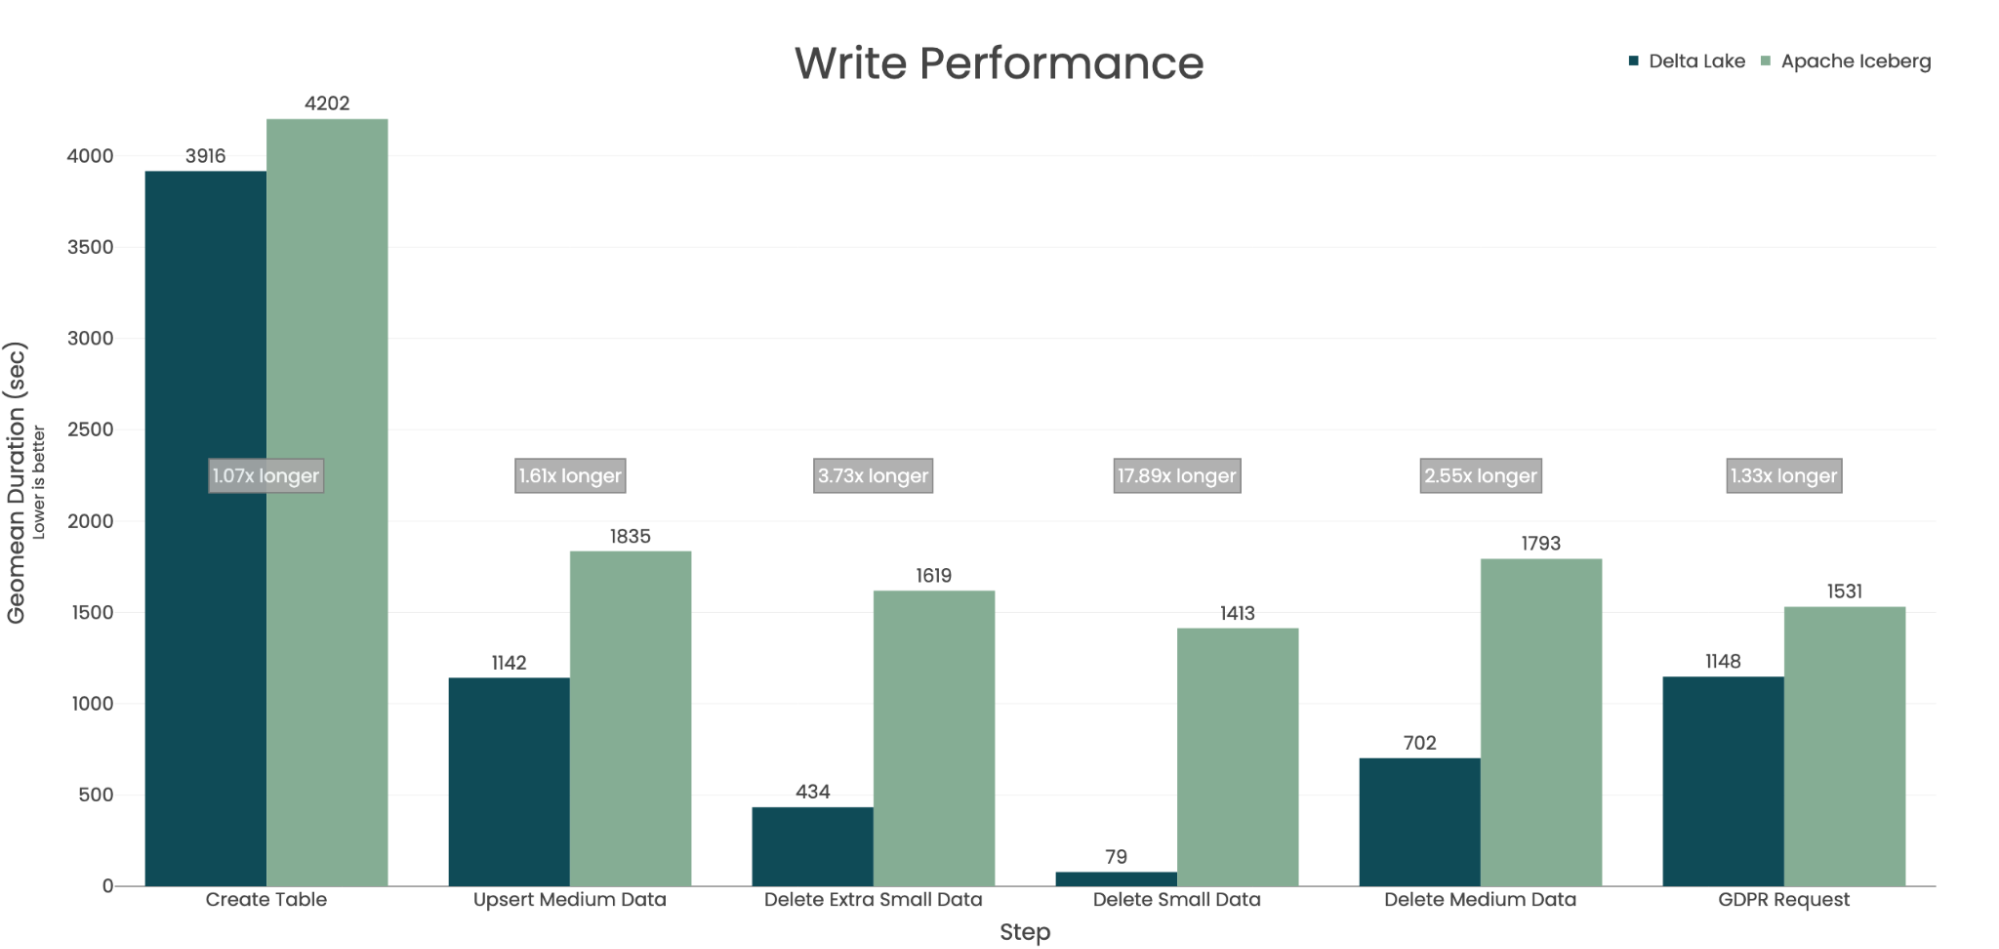 Write Performance